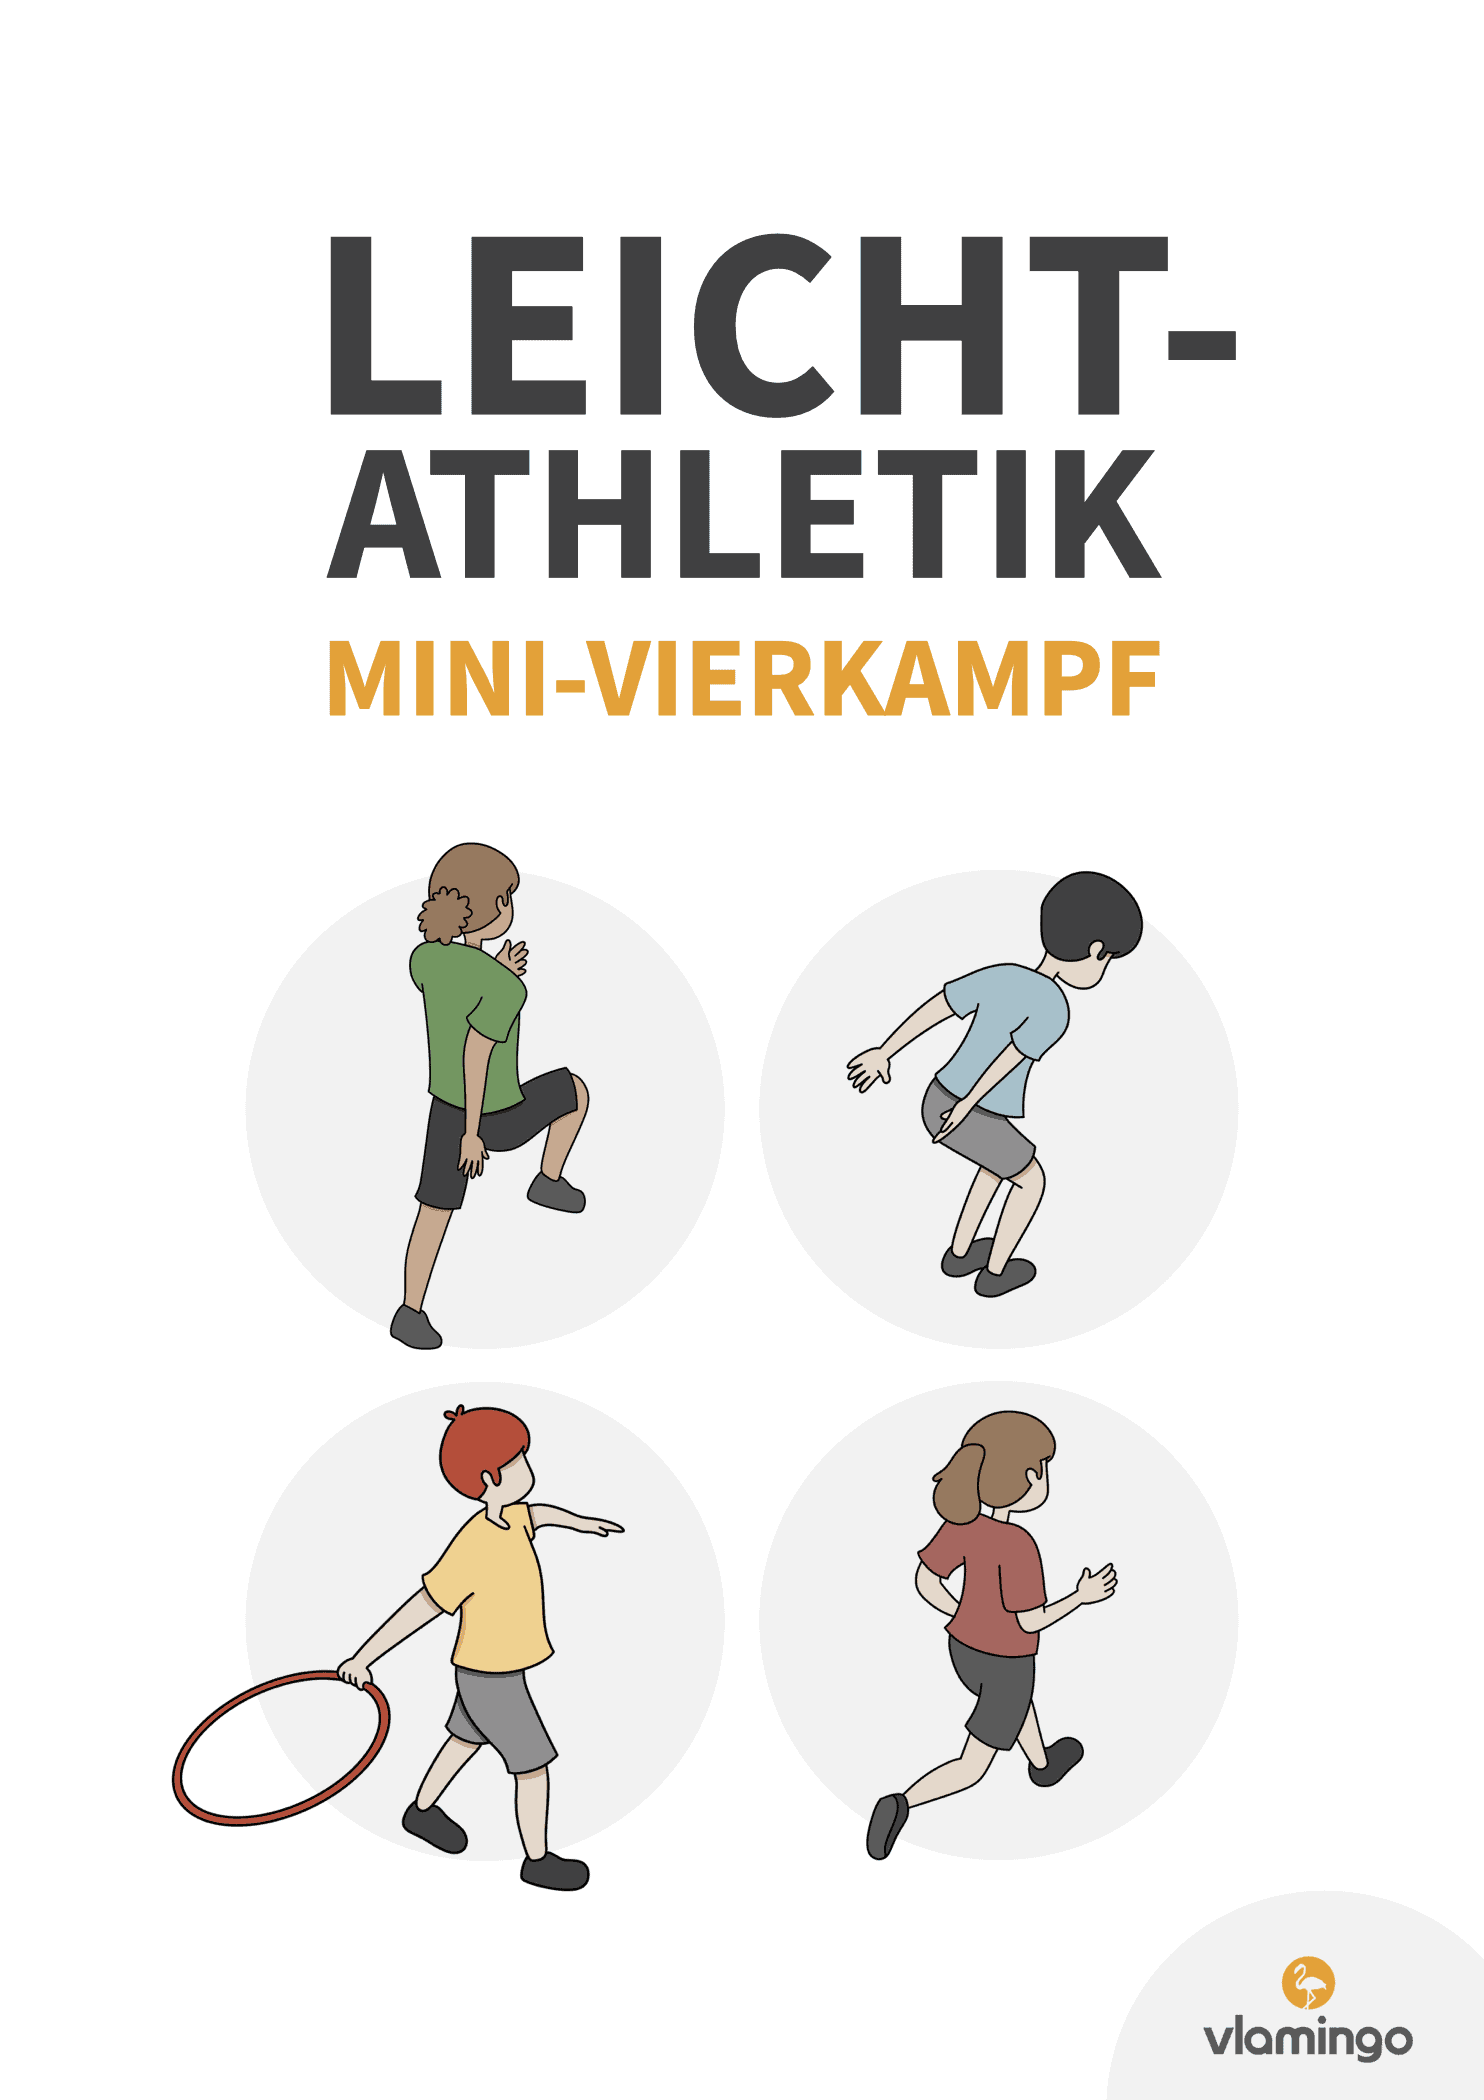 Leichtathletik - Mini-Vierkampt für den Sportunterricht & Sportfeste